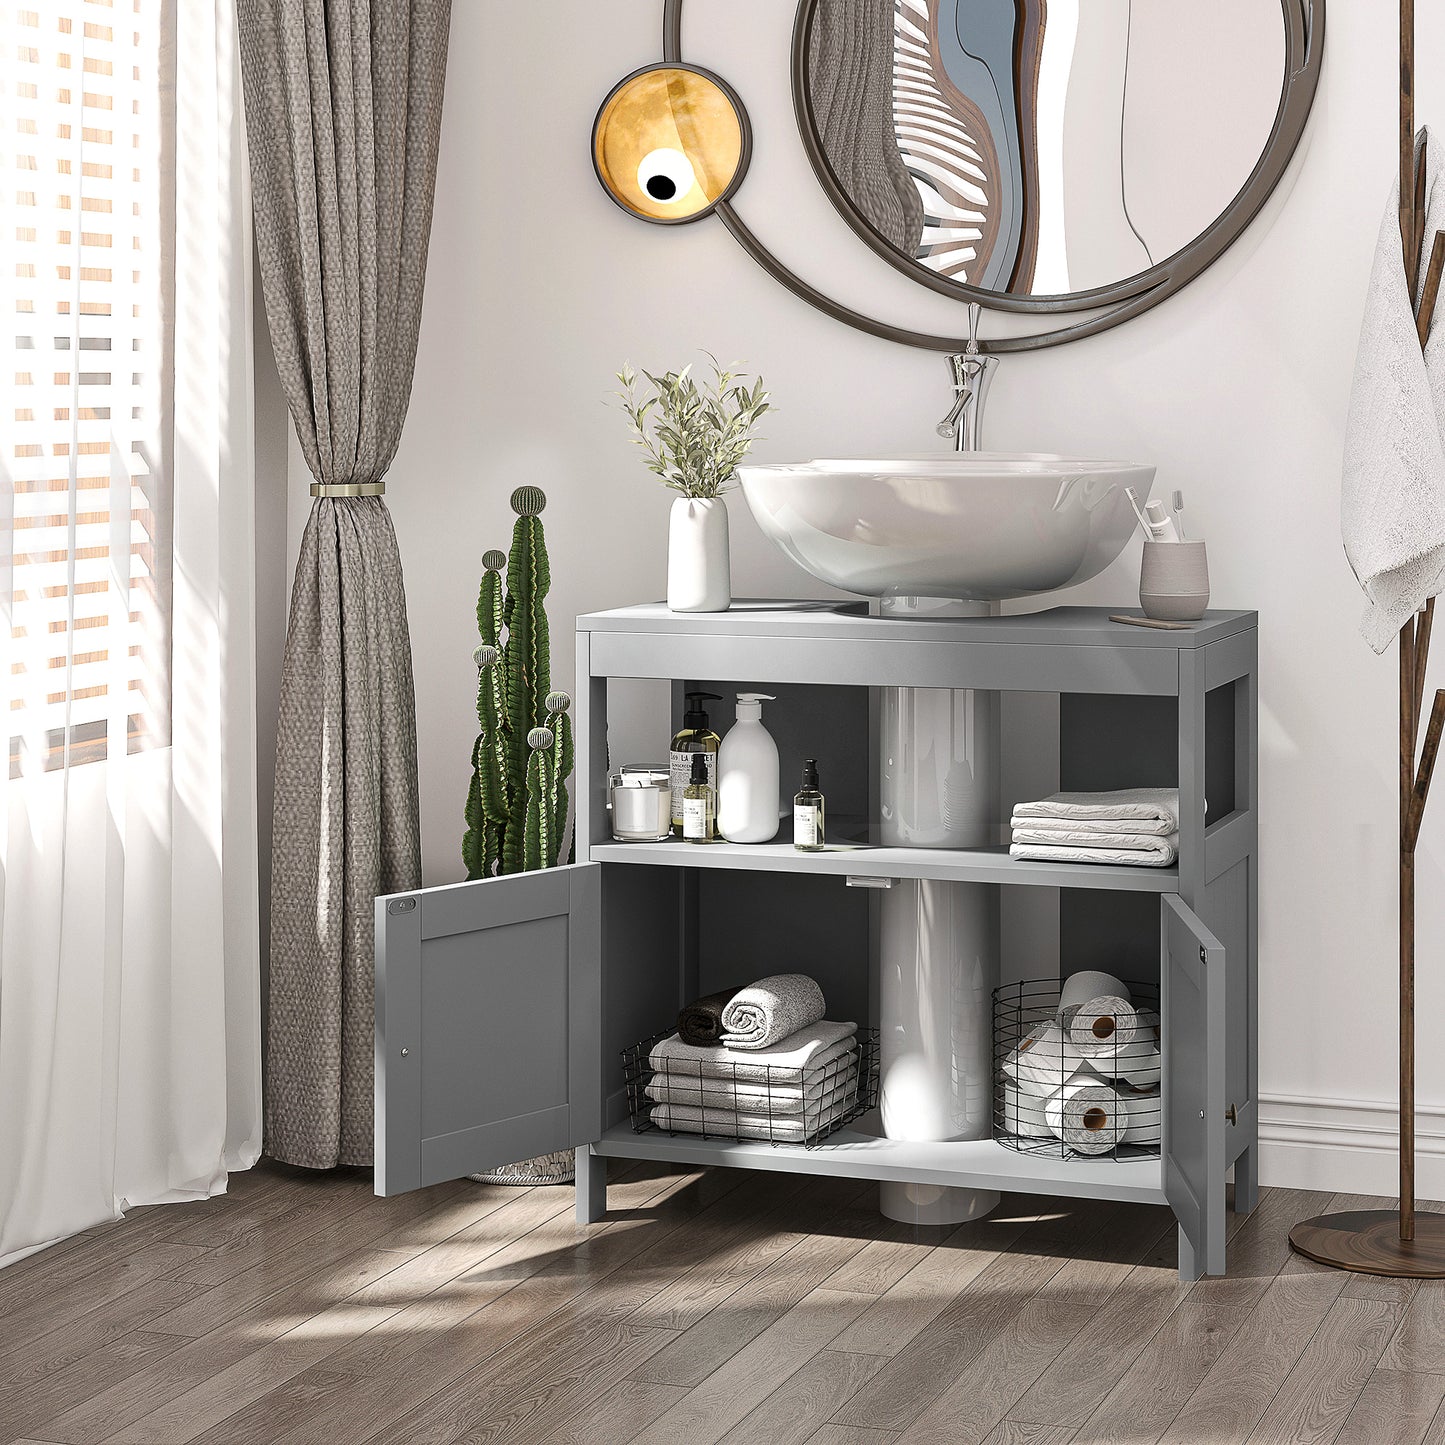 kleankin Pedestal Under Sink Cabinet with Double Doors, Modern Bathroom Vanity Storage Unit with Shelves, Light Grey